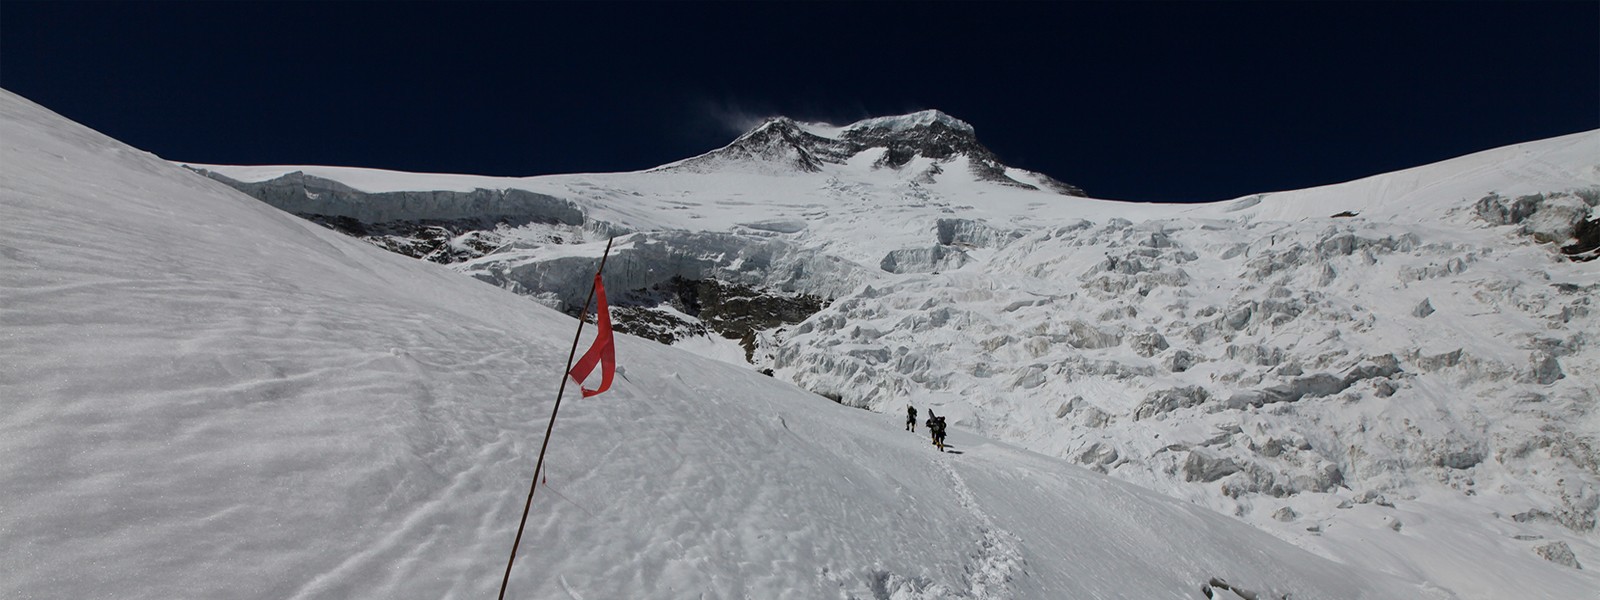 Mt. Dhaulagiri Climbing